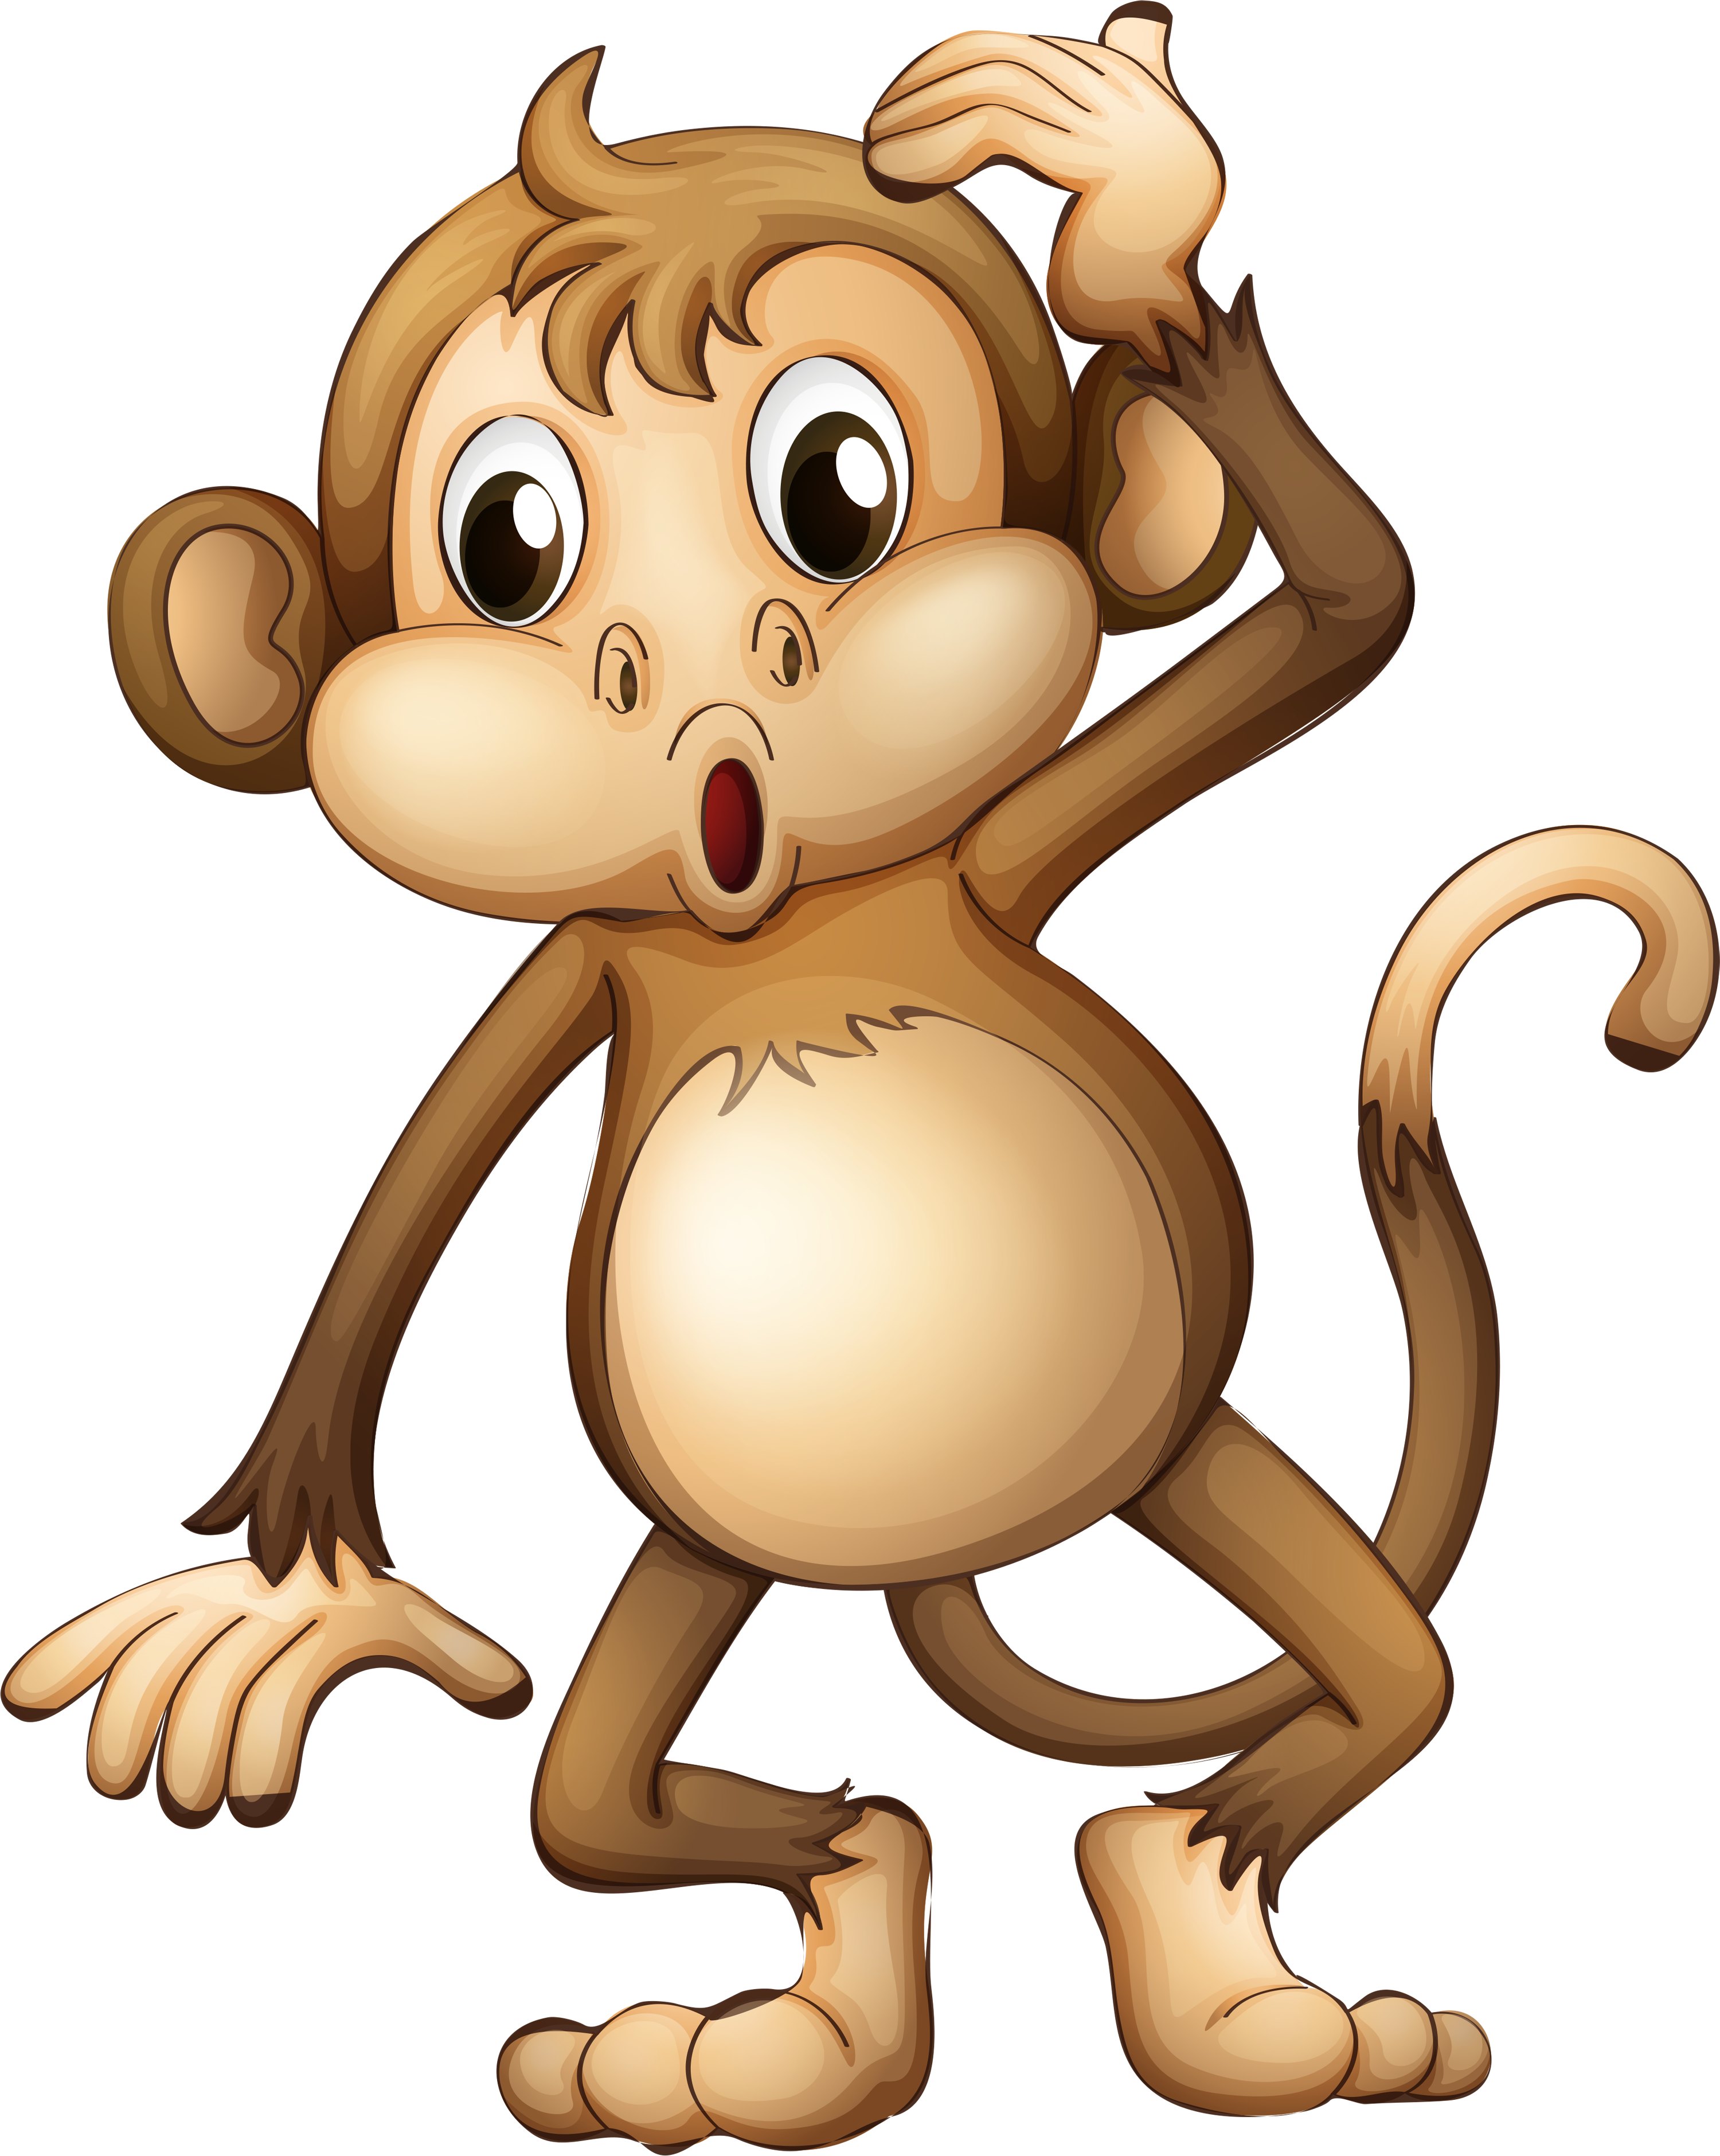 Monkey Clip Art Cartoon Monkey Png Download 30003760 Free